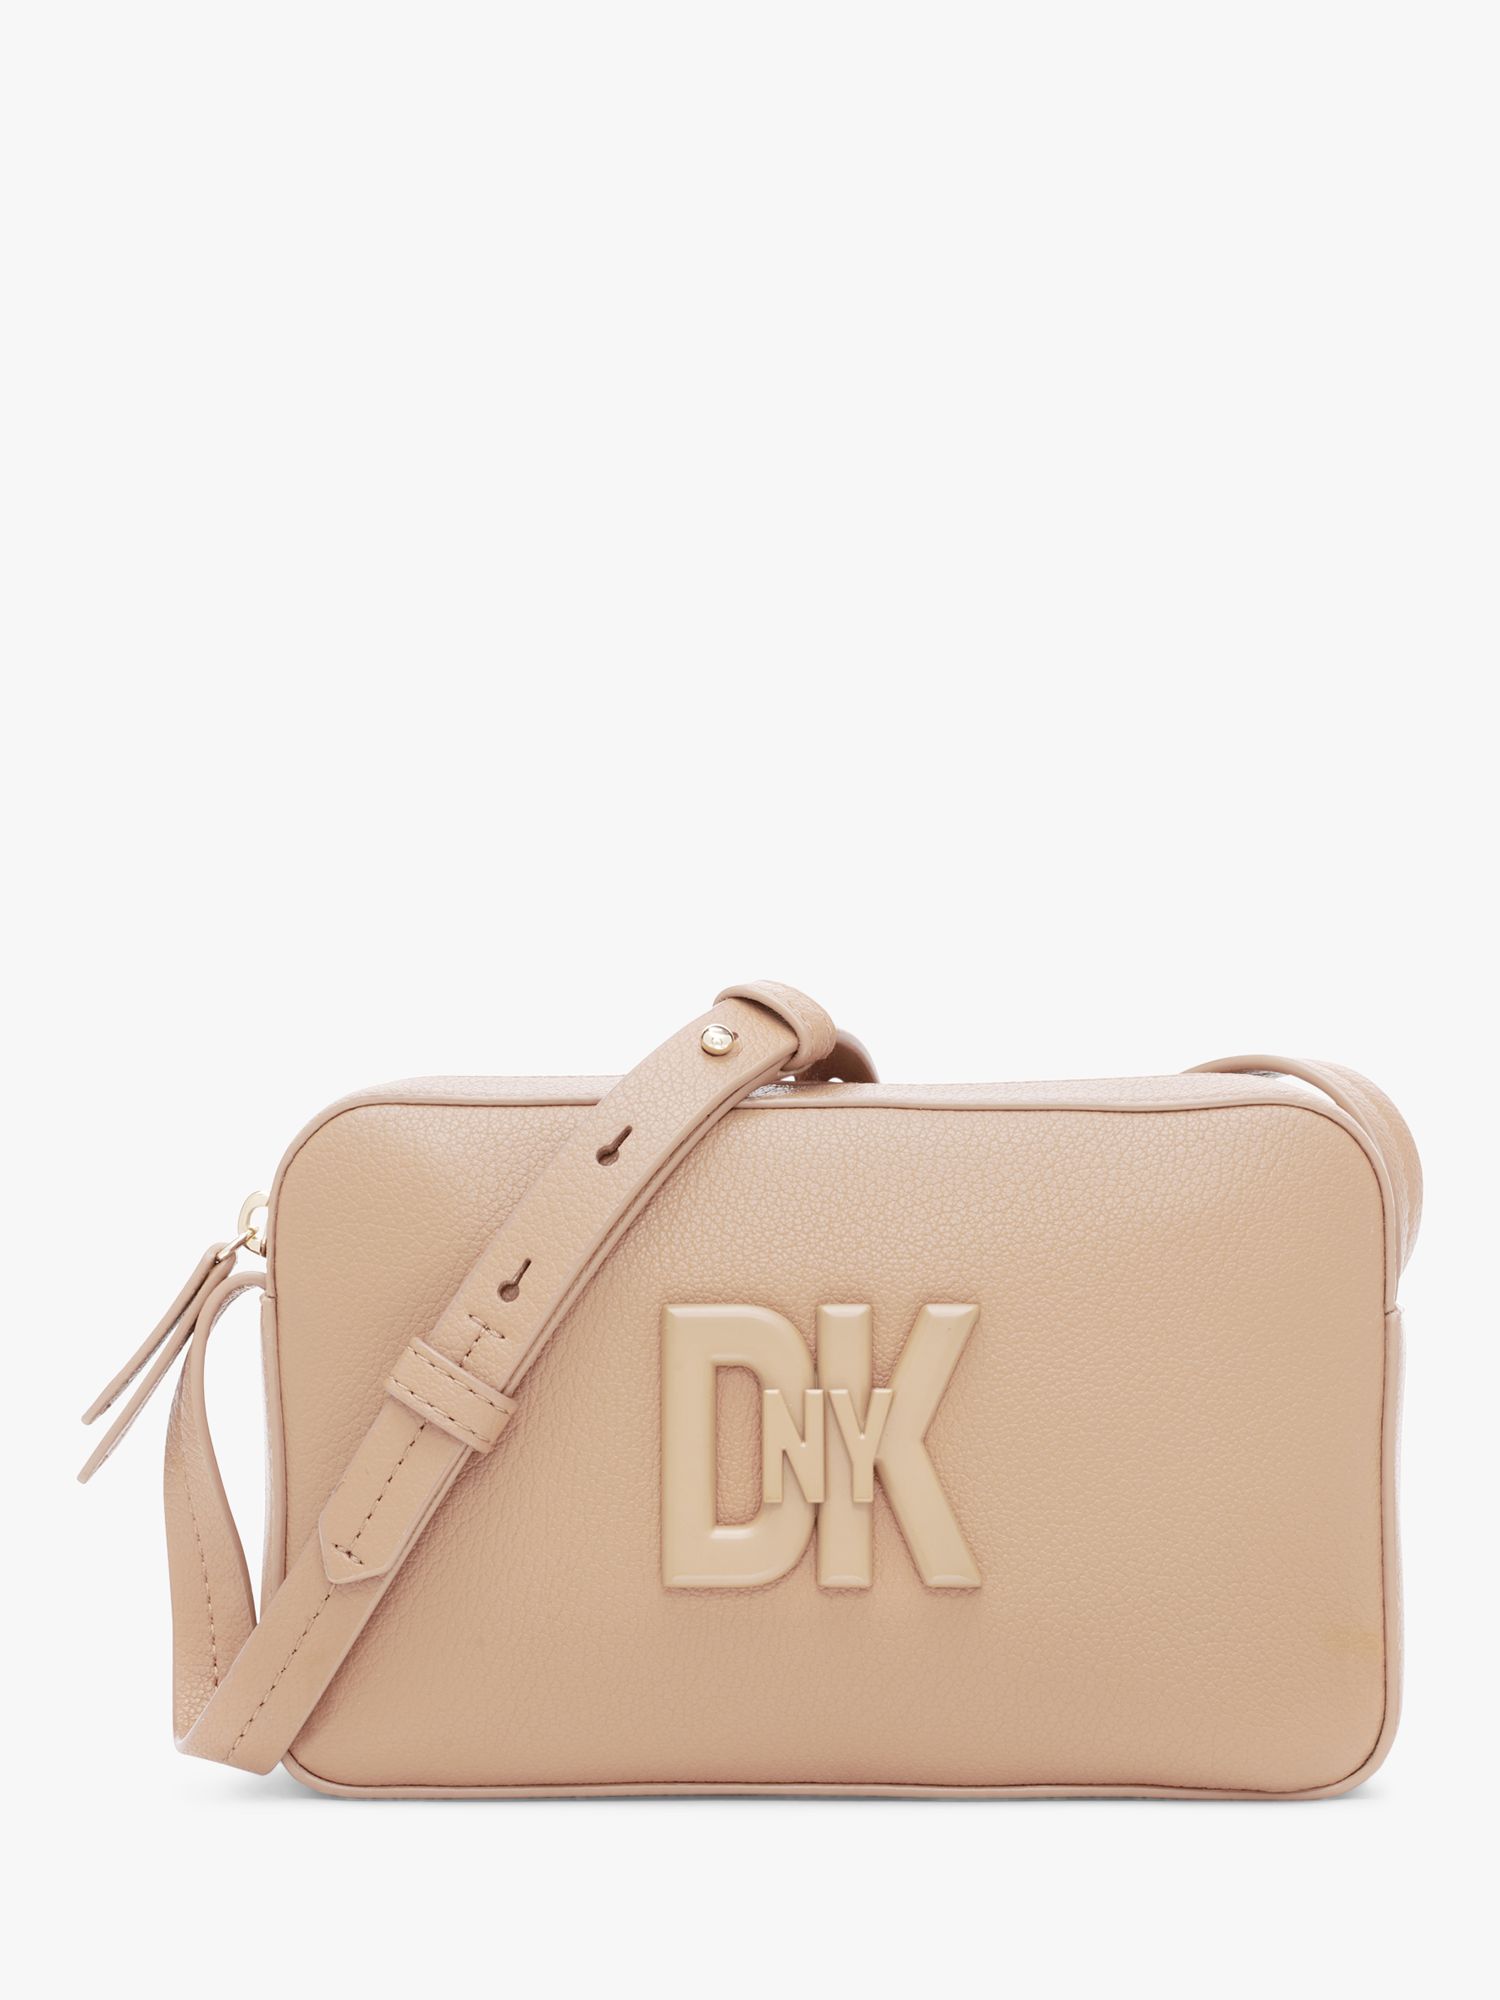 Buy Dkny Monogram Leather Crossbody Bag - Neutrals At 25% Off